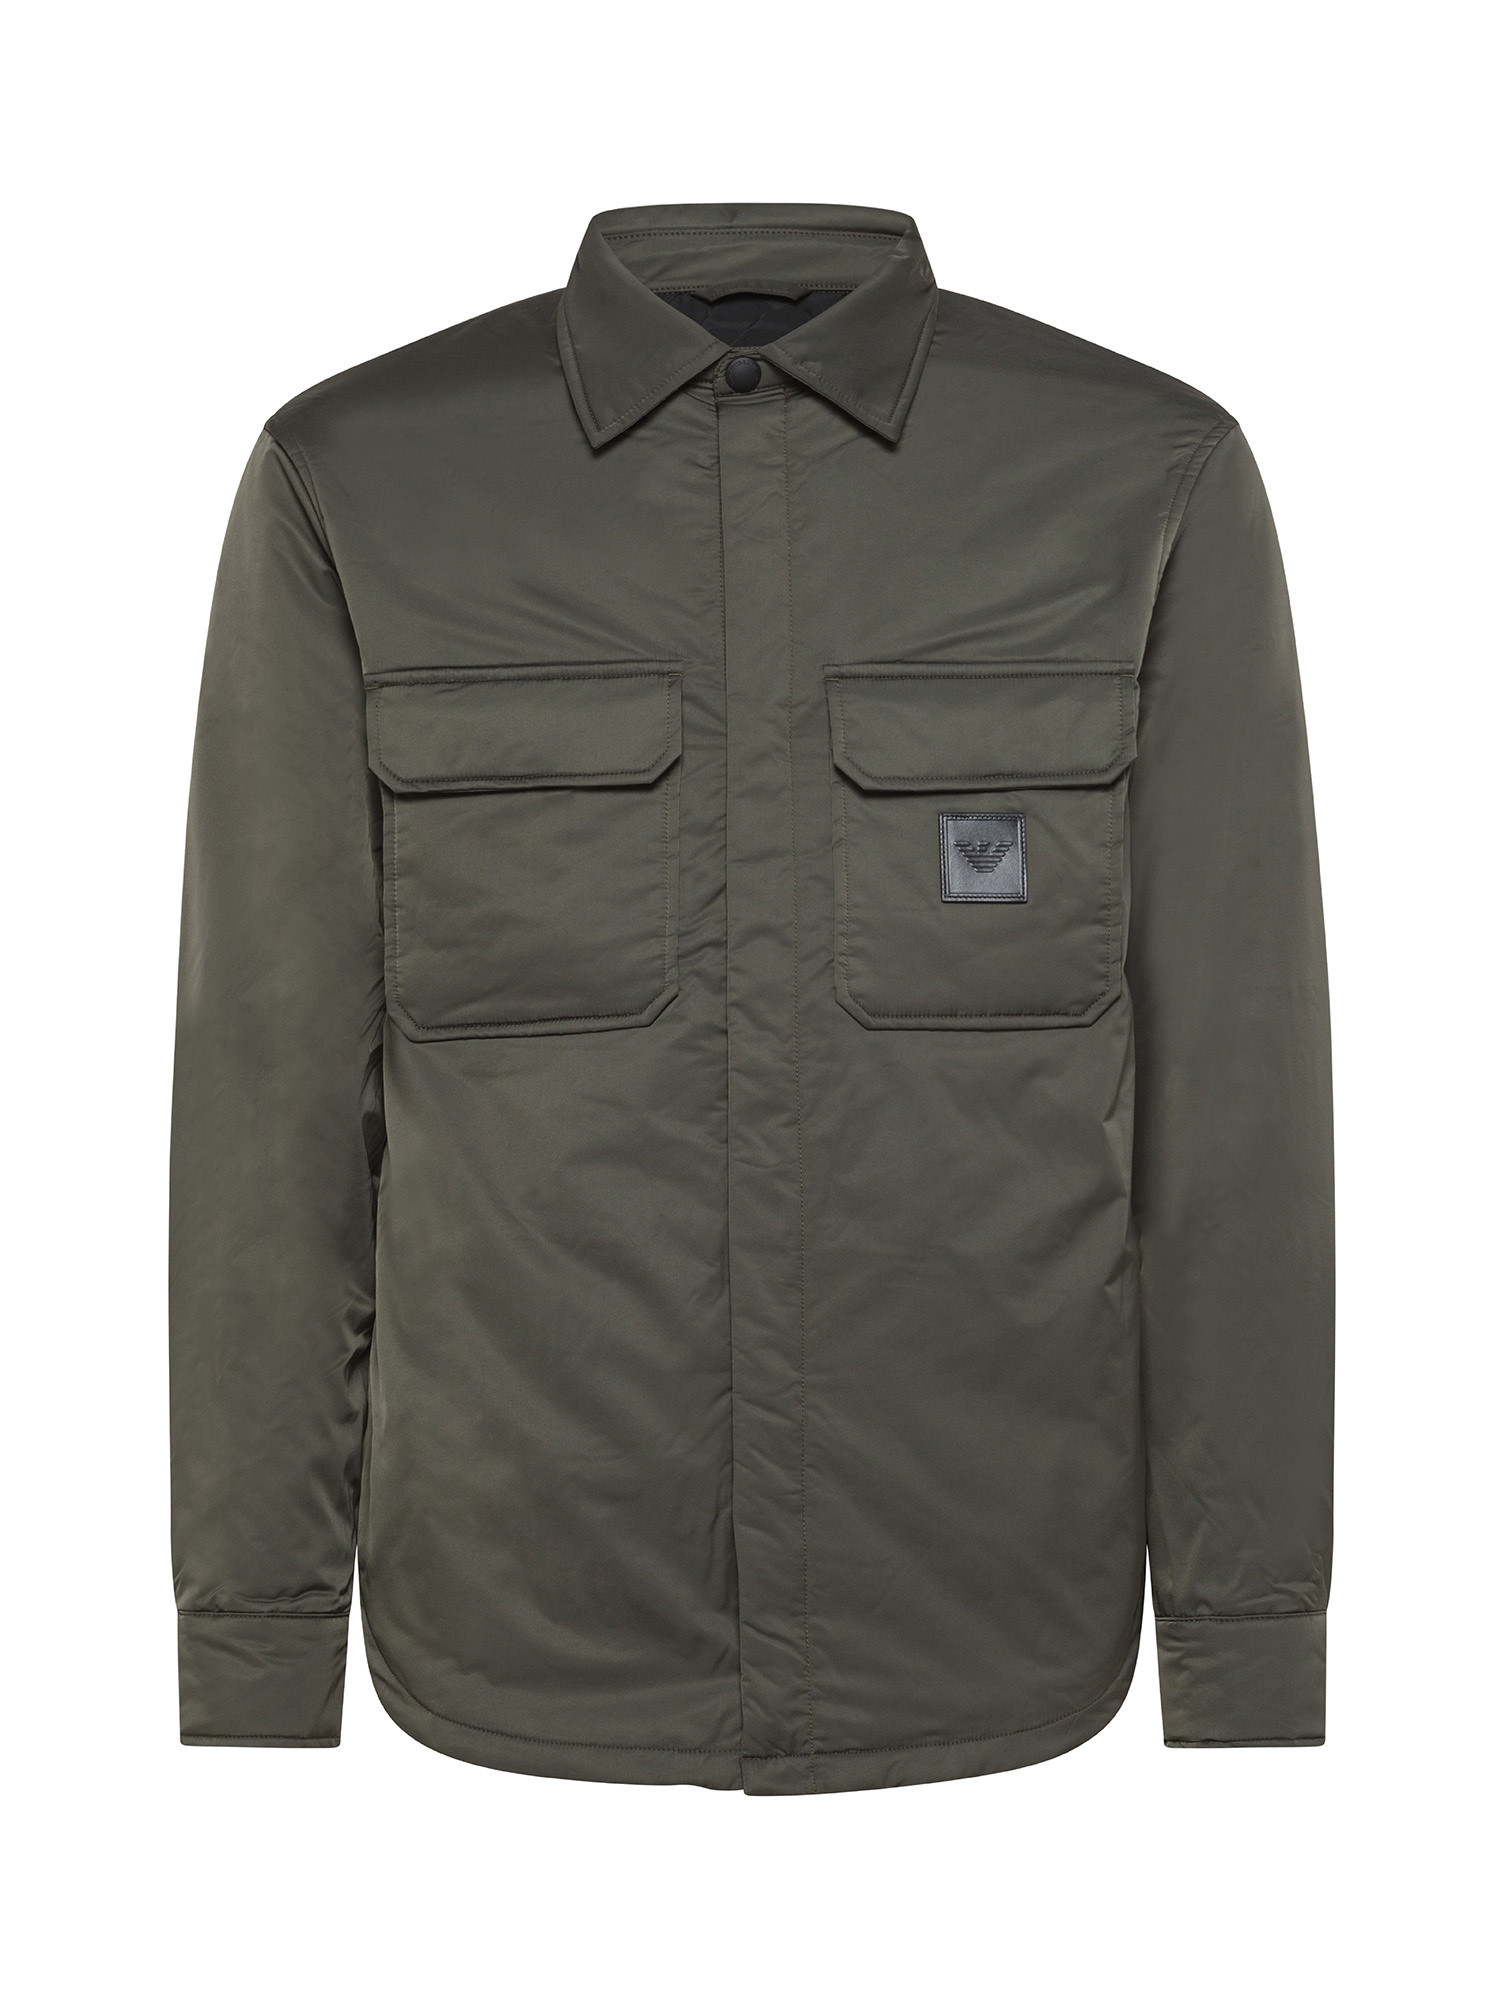 Emporio Armani - Jacket with logo, Green, large image number 0